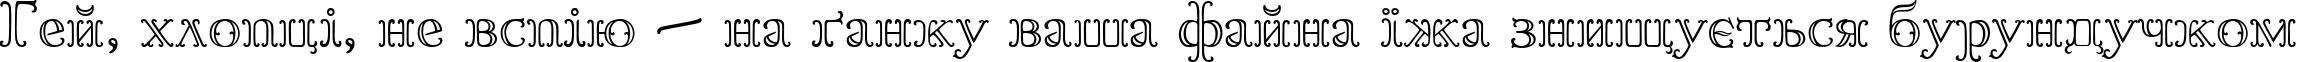 Пример написания шрифтом Goudy OrnateC текста на украинском